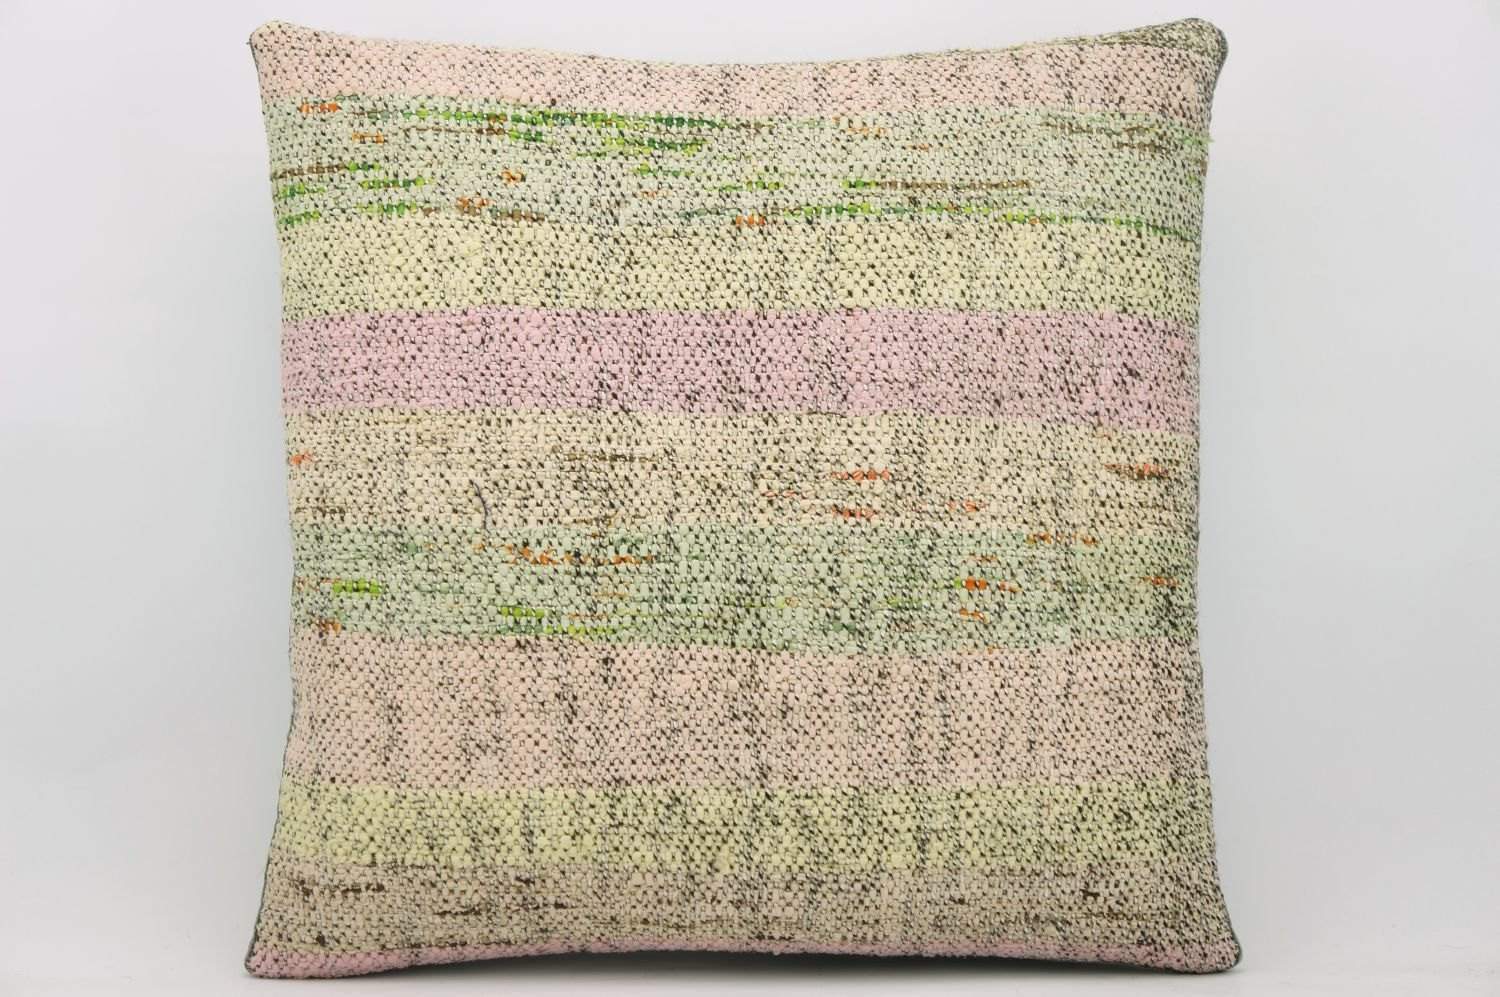 16x16 Hand Woven wool light green pinkish striped Kilim Pillow cushion 1048_A Wool cushion